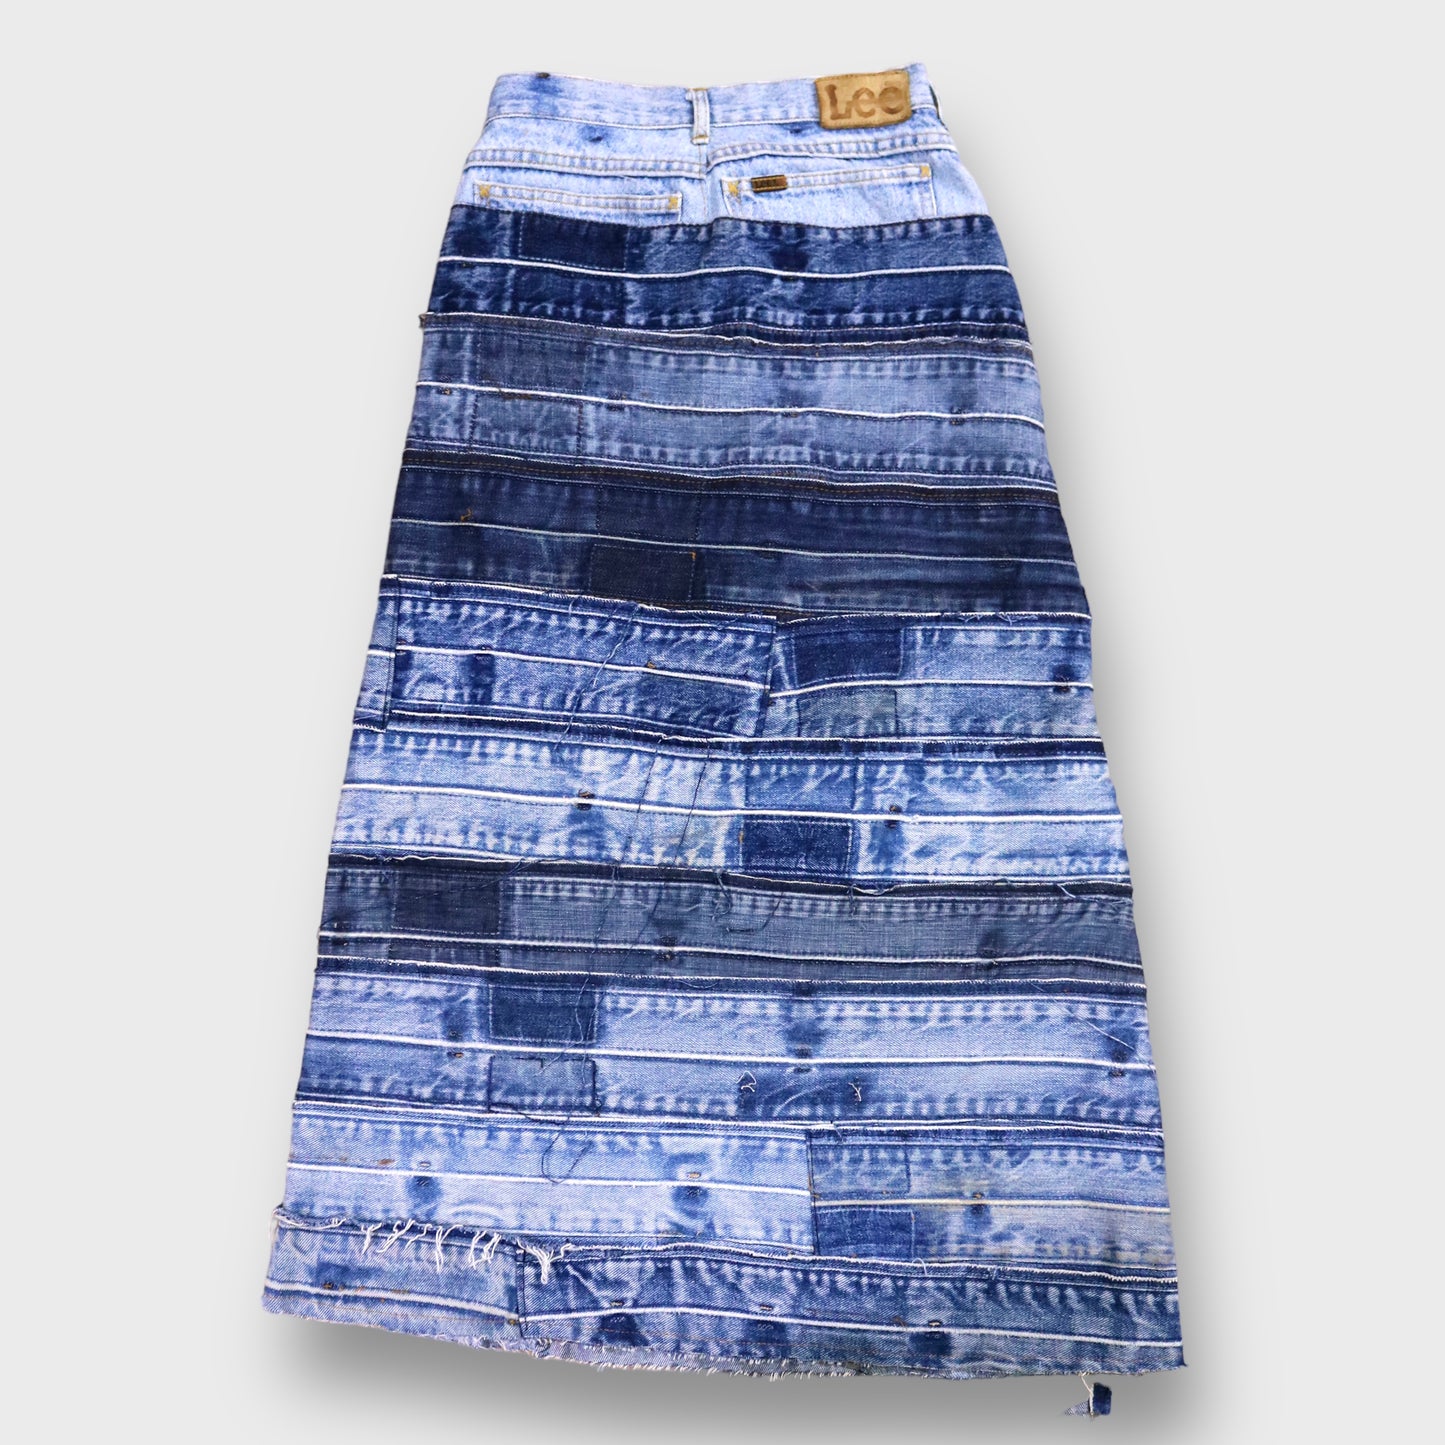 Remake tsugihagi design denim skirt